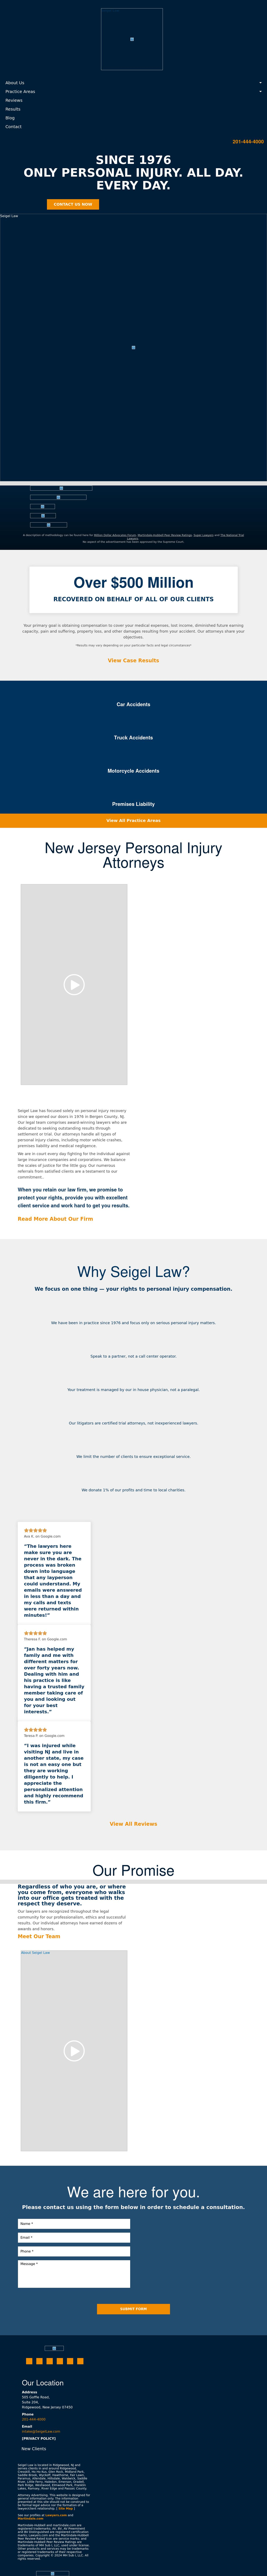 Seigel Law - Ridgewood NJ Lawyers